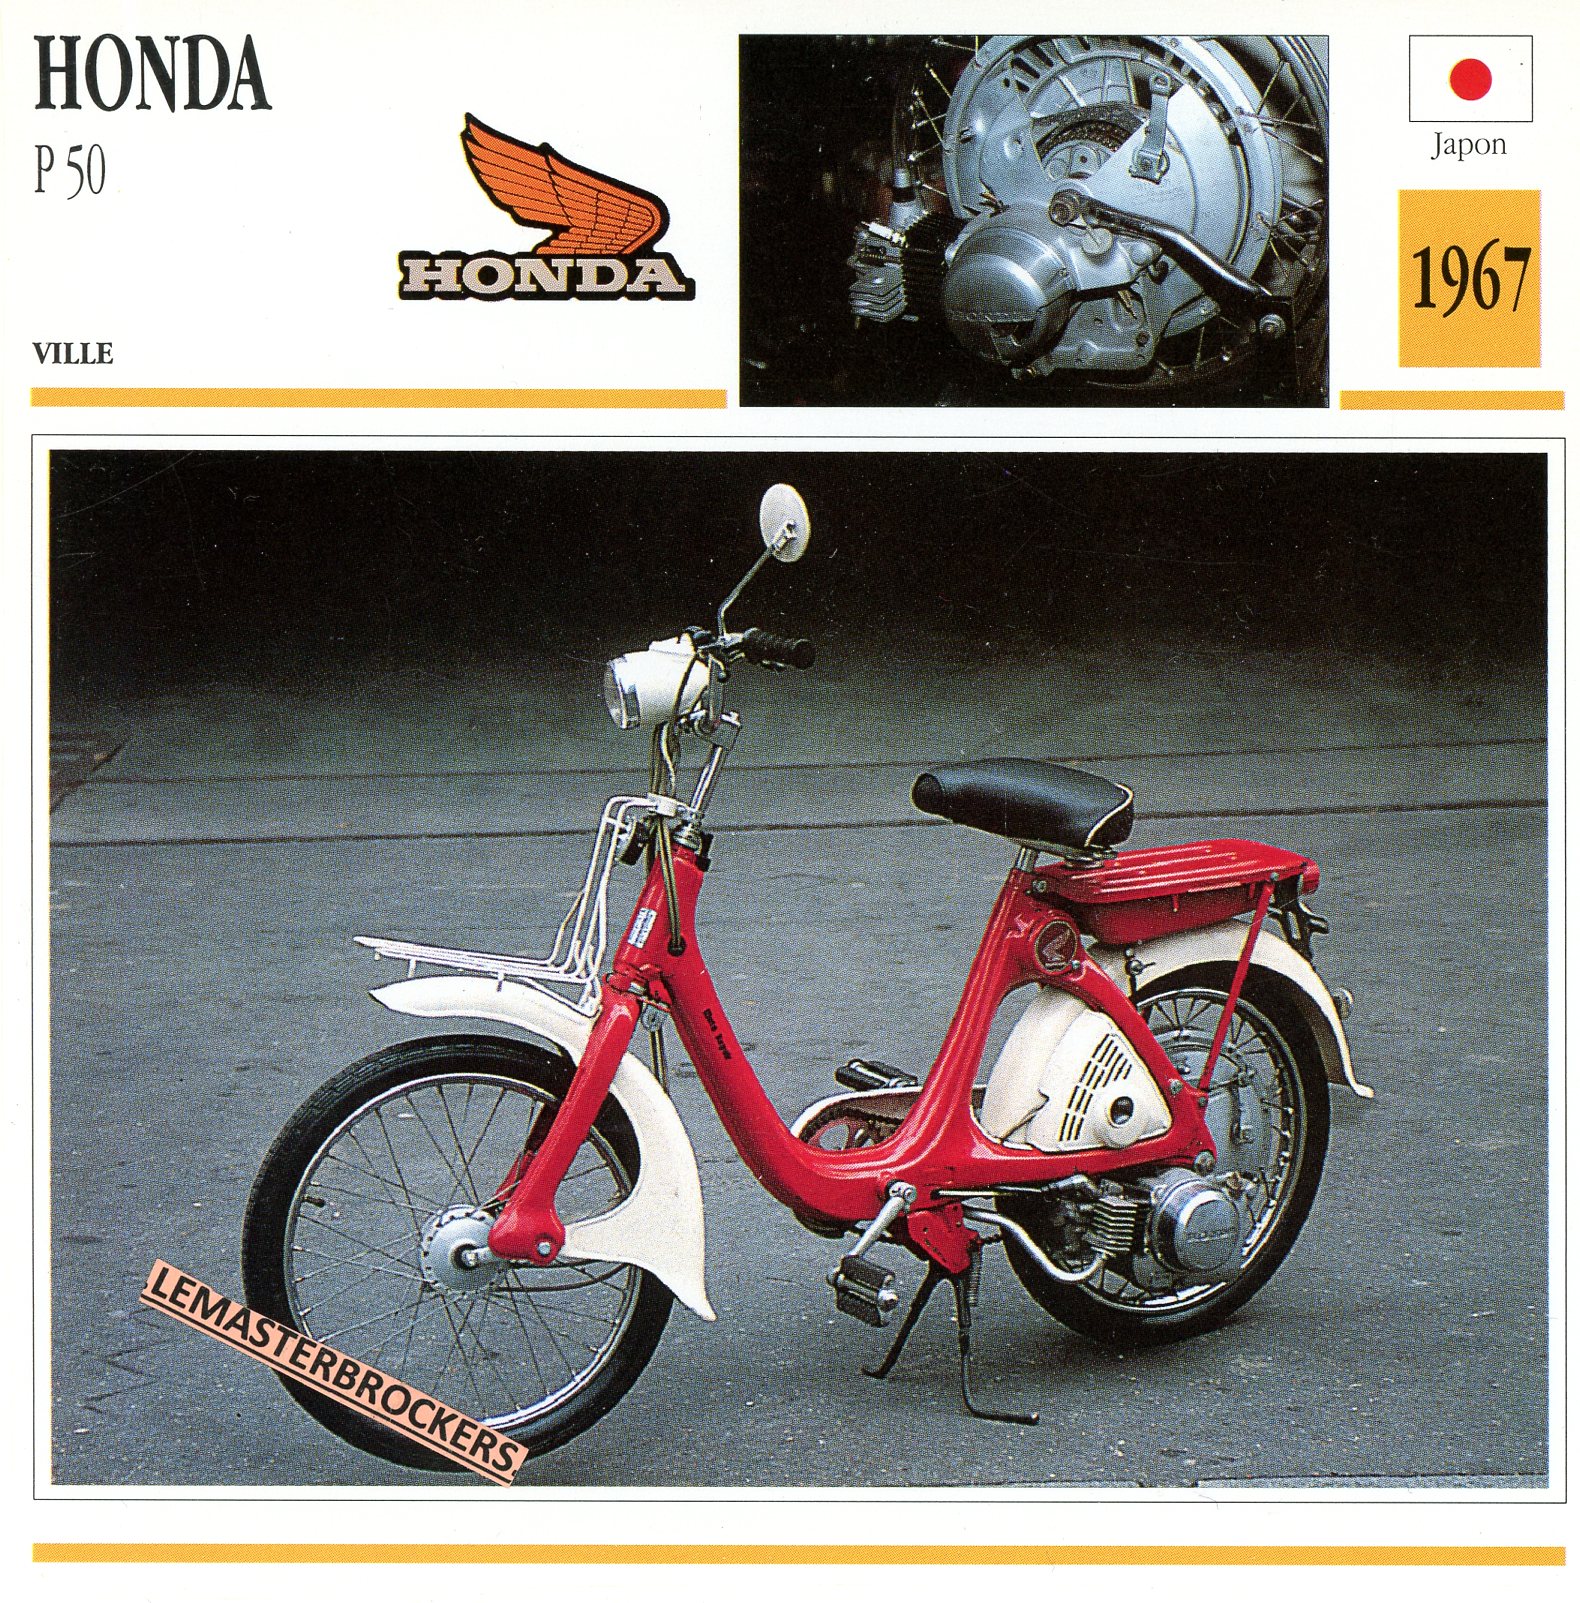 FICHE-MOTO-HONDA-P50-1967-LEMASTERBROCKERS-CARS-MOTORCYCLE